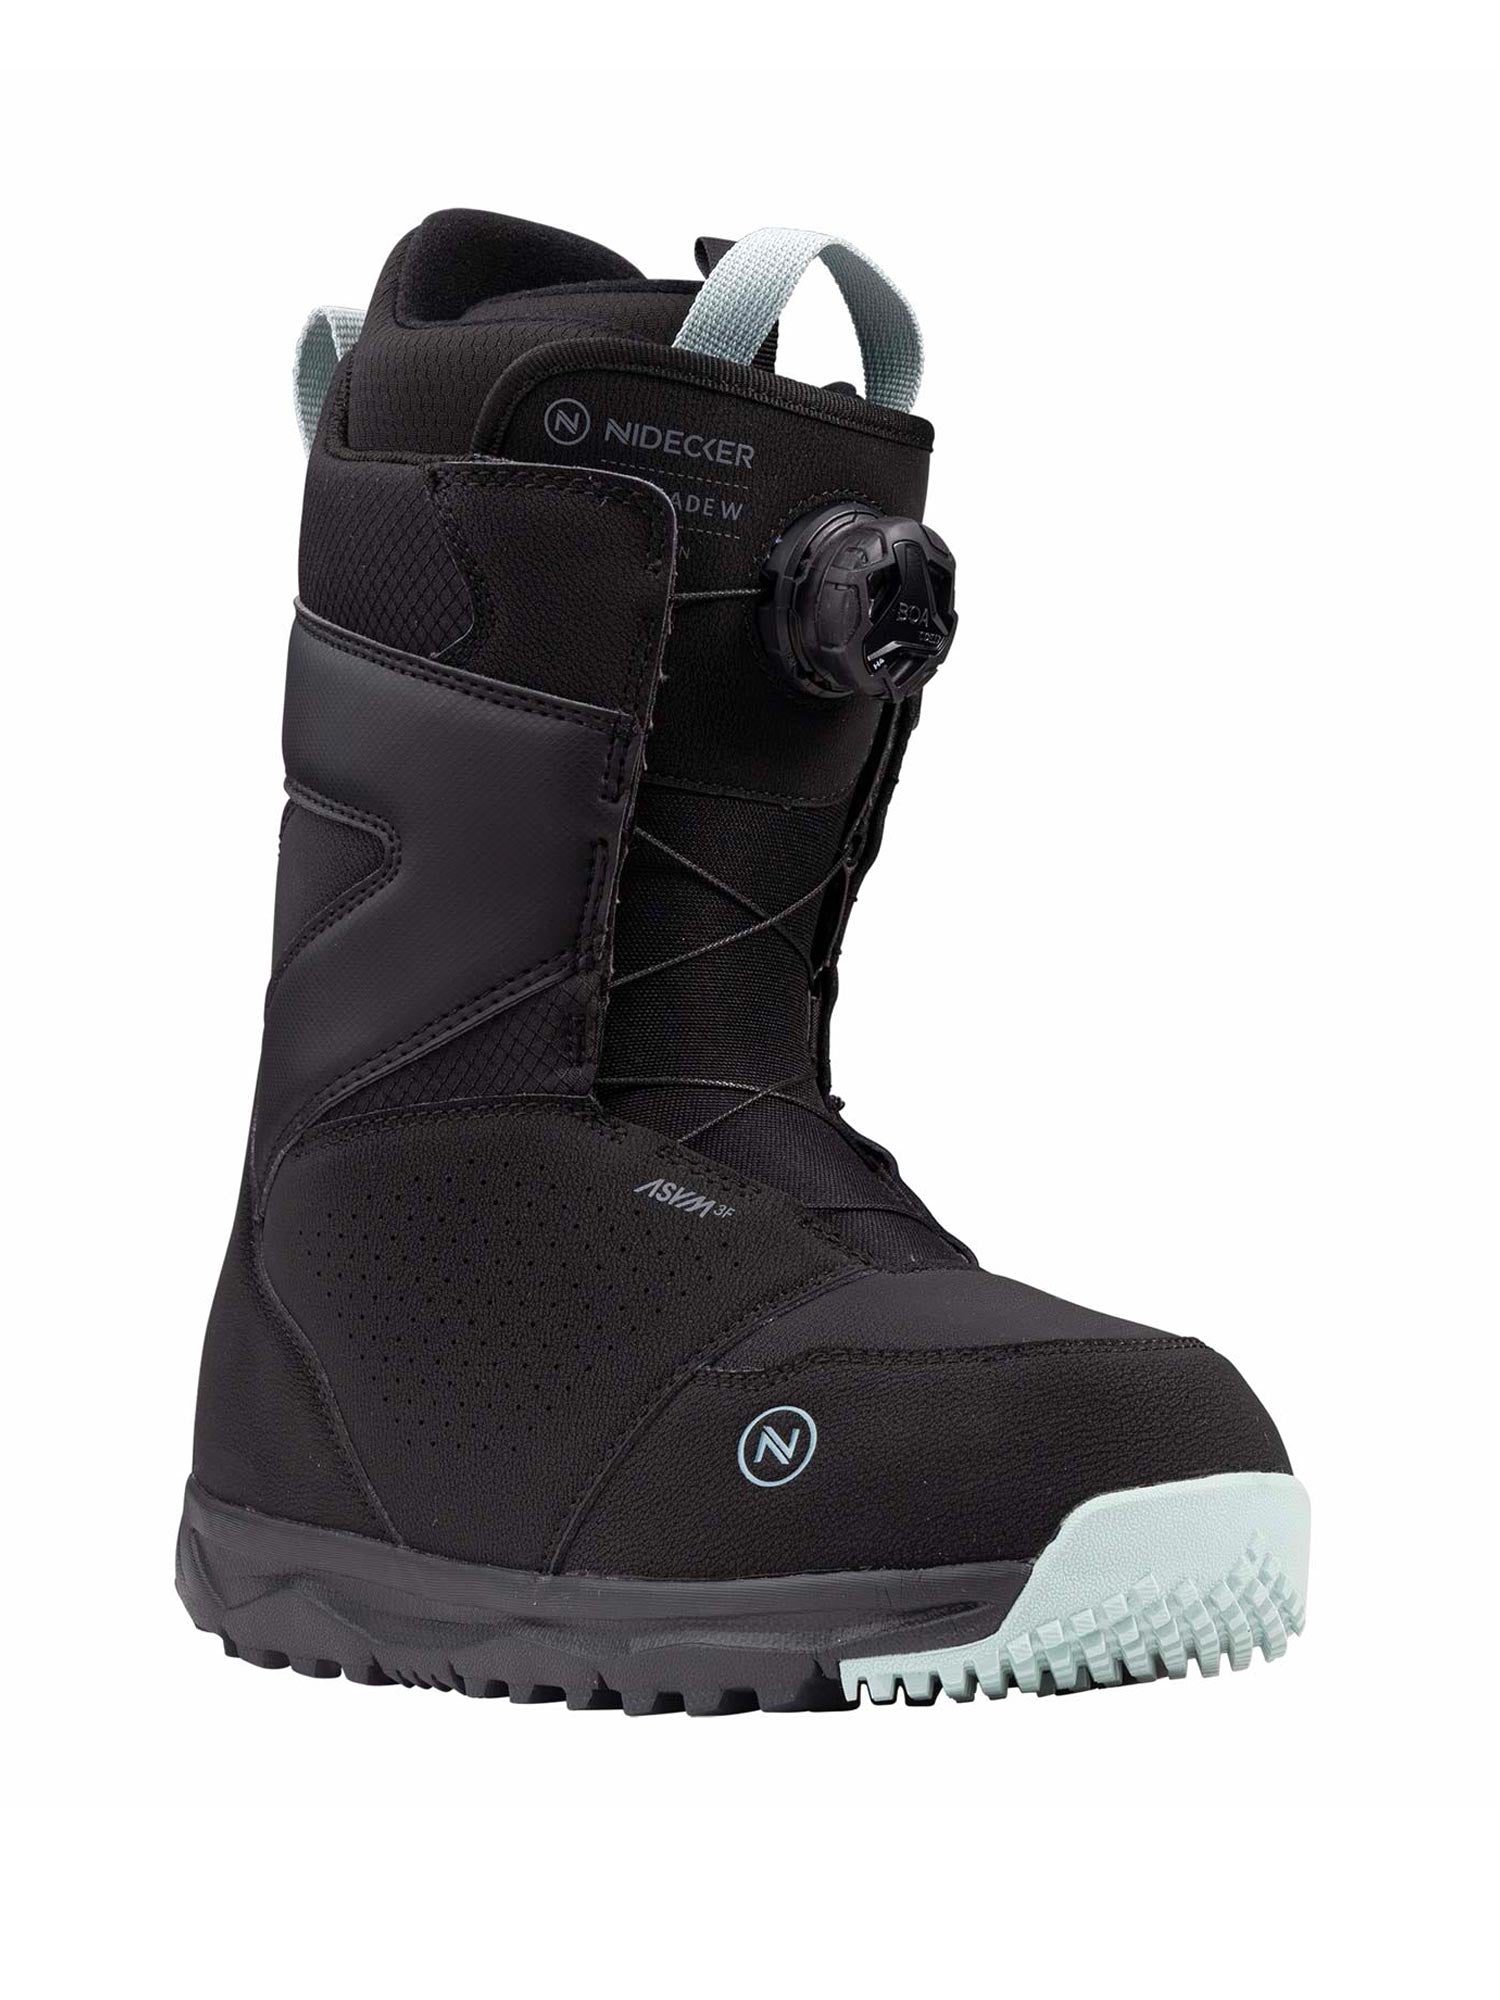 women's Nidecker Cascade snowboard boots, black with light blue accents